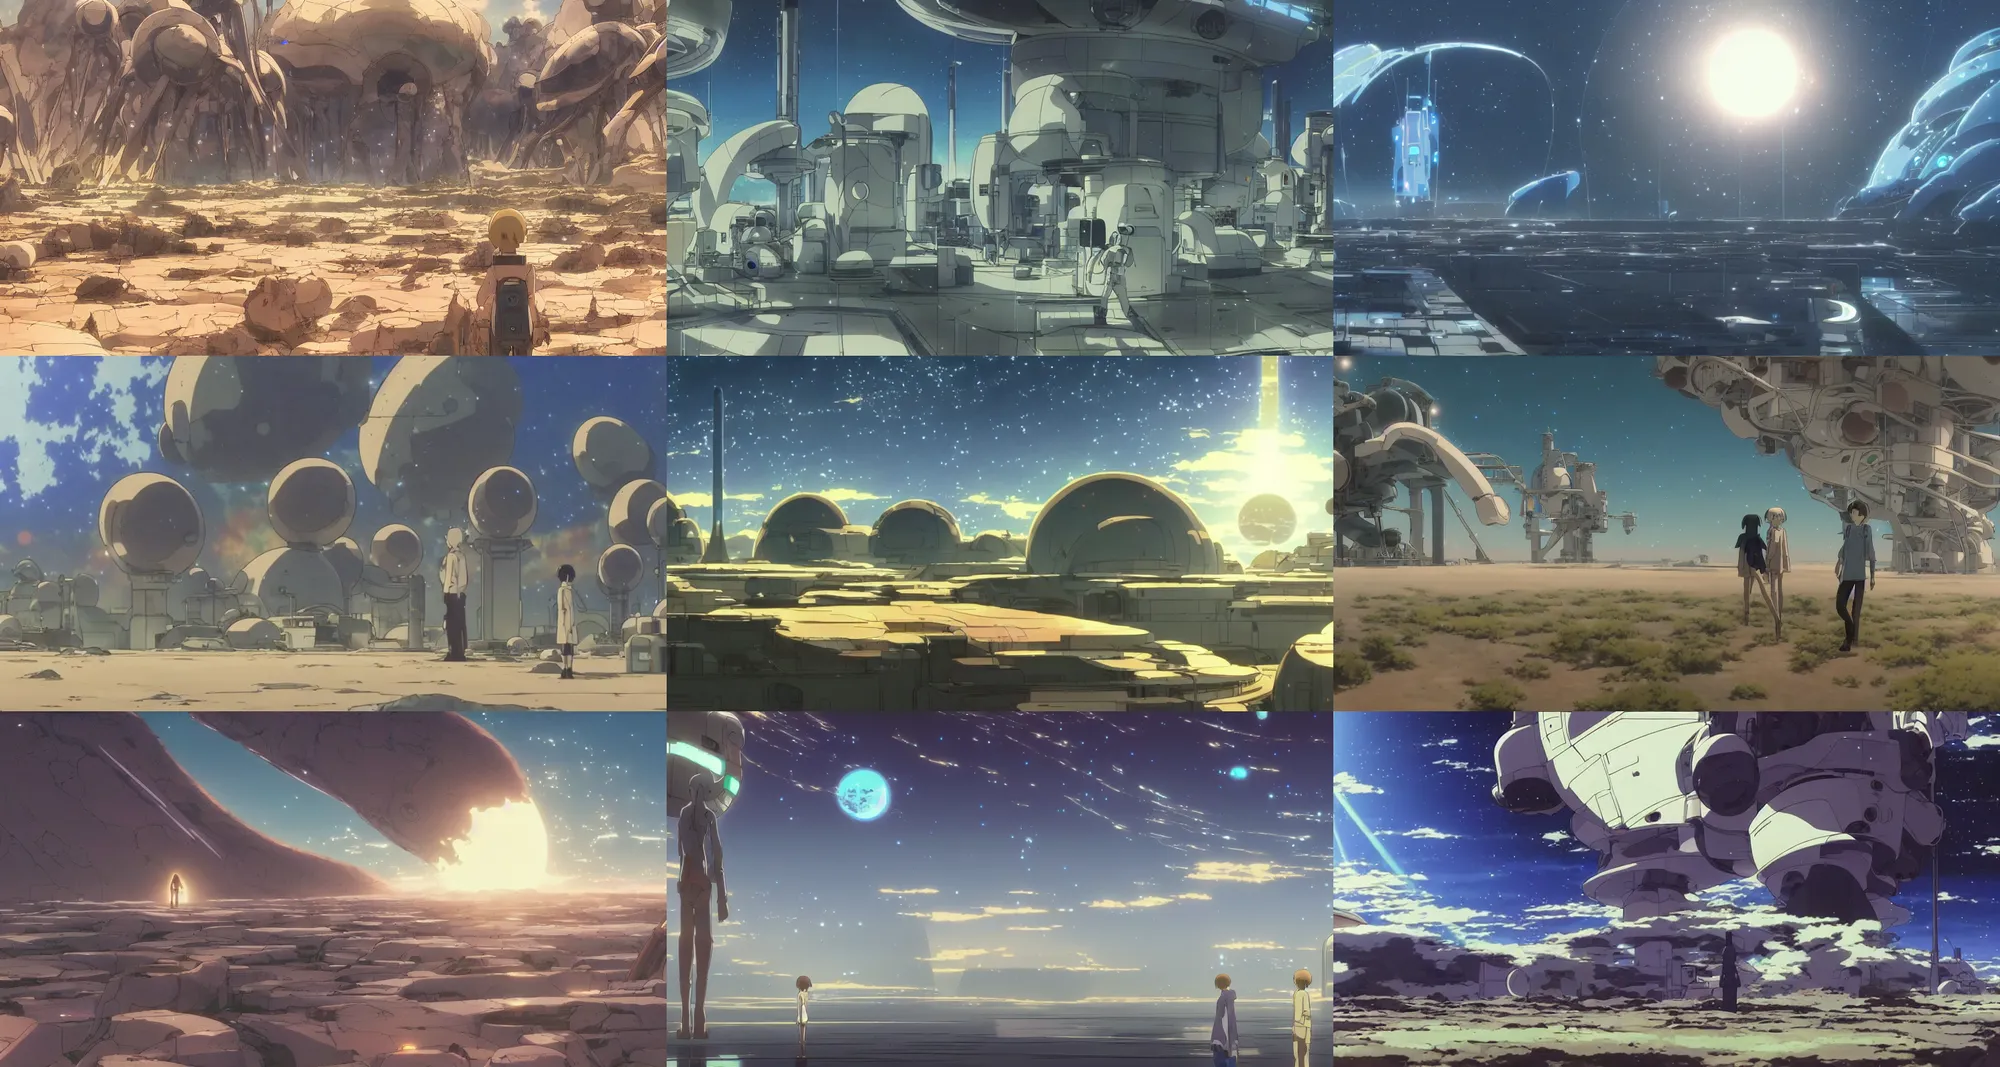 Prompt: screenshot from the award-winning science fiction anime film by makoto shinkai, futuristic scientific laboratory, desert alien planet, from the anime film by studio ghibli